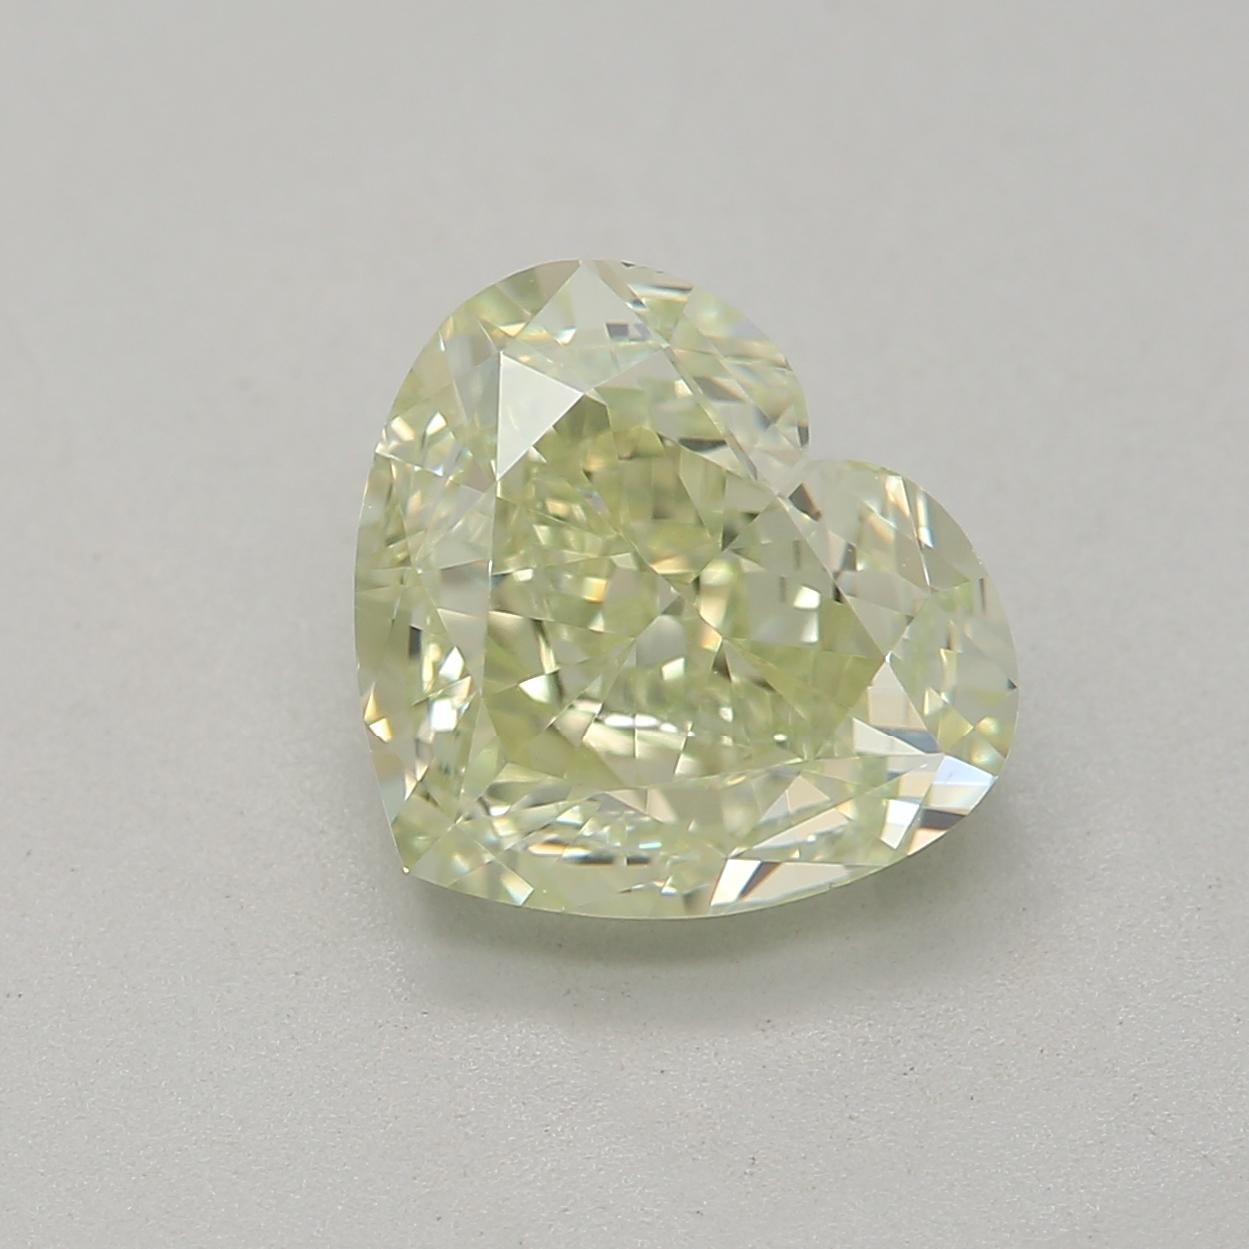 1.51 Carat Fancy Light Green Yellow Heart Cut Diamond VS1 Clarity GIA Certified For Sale